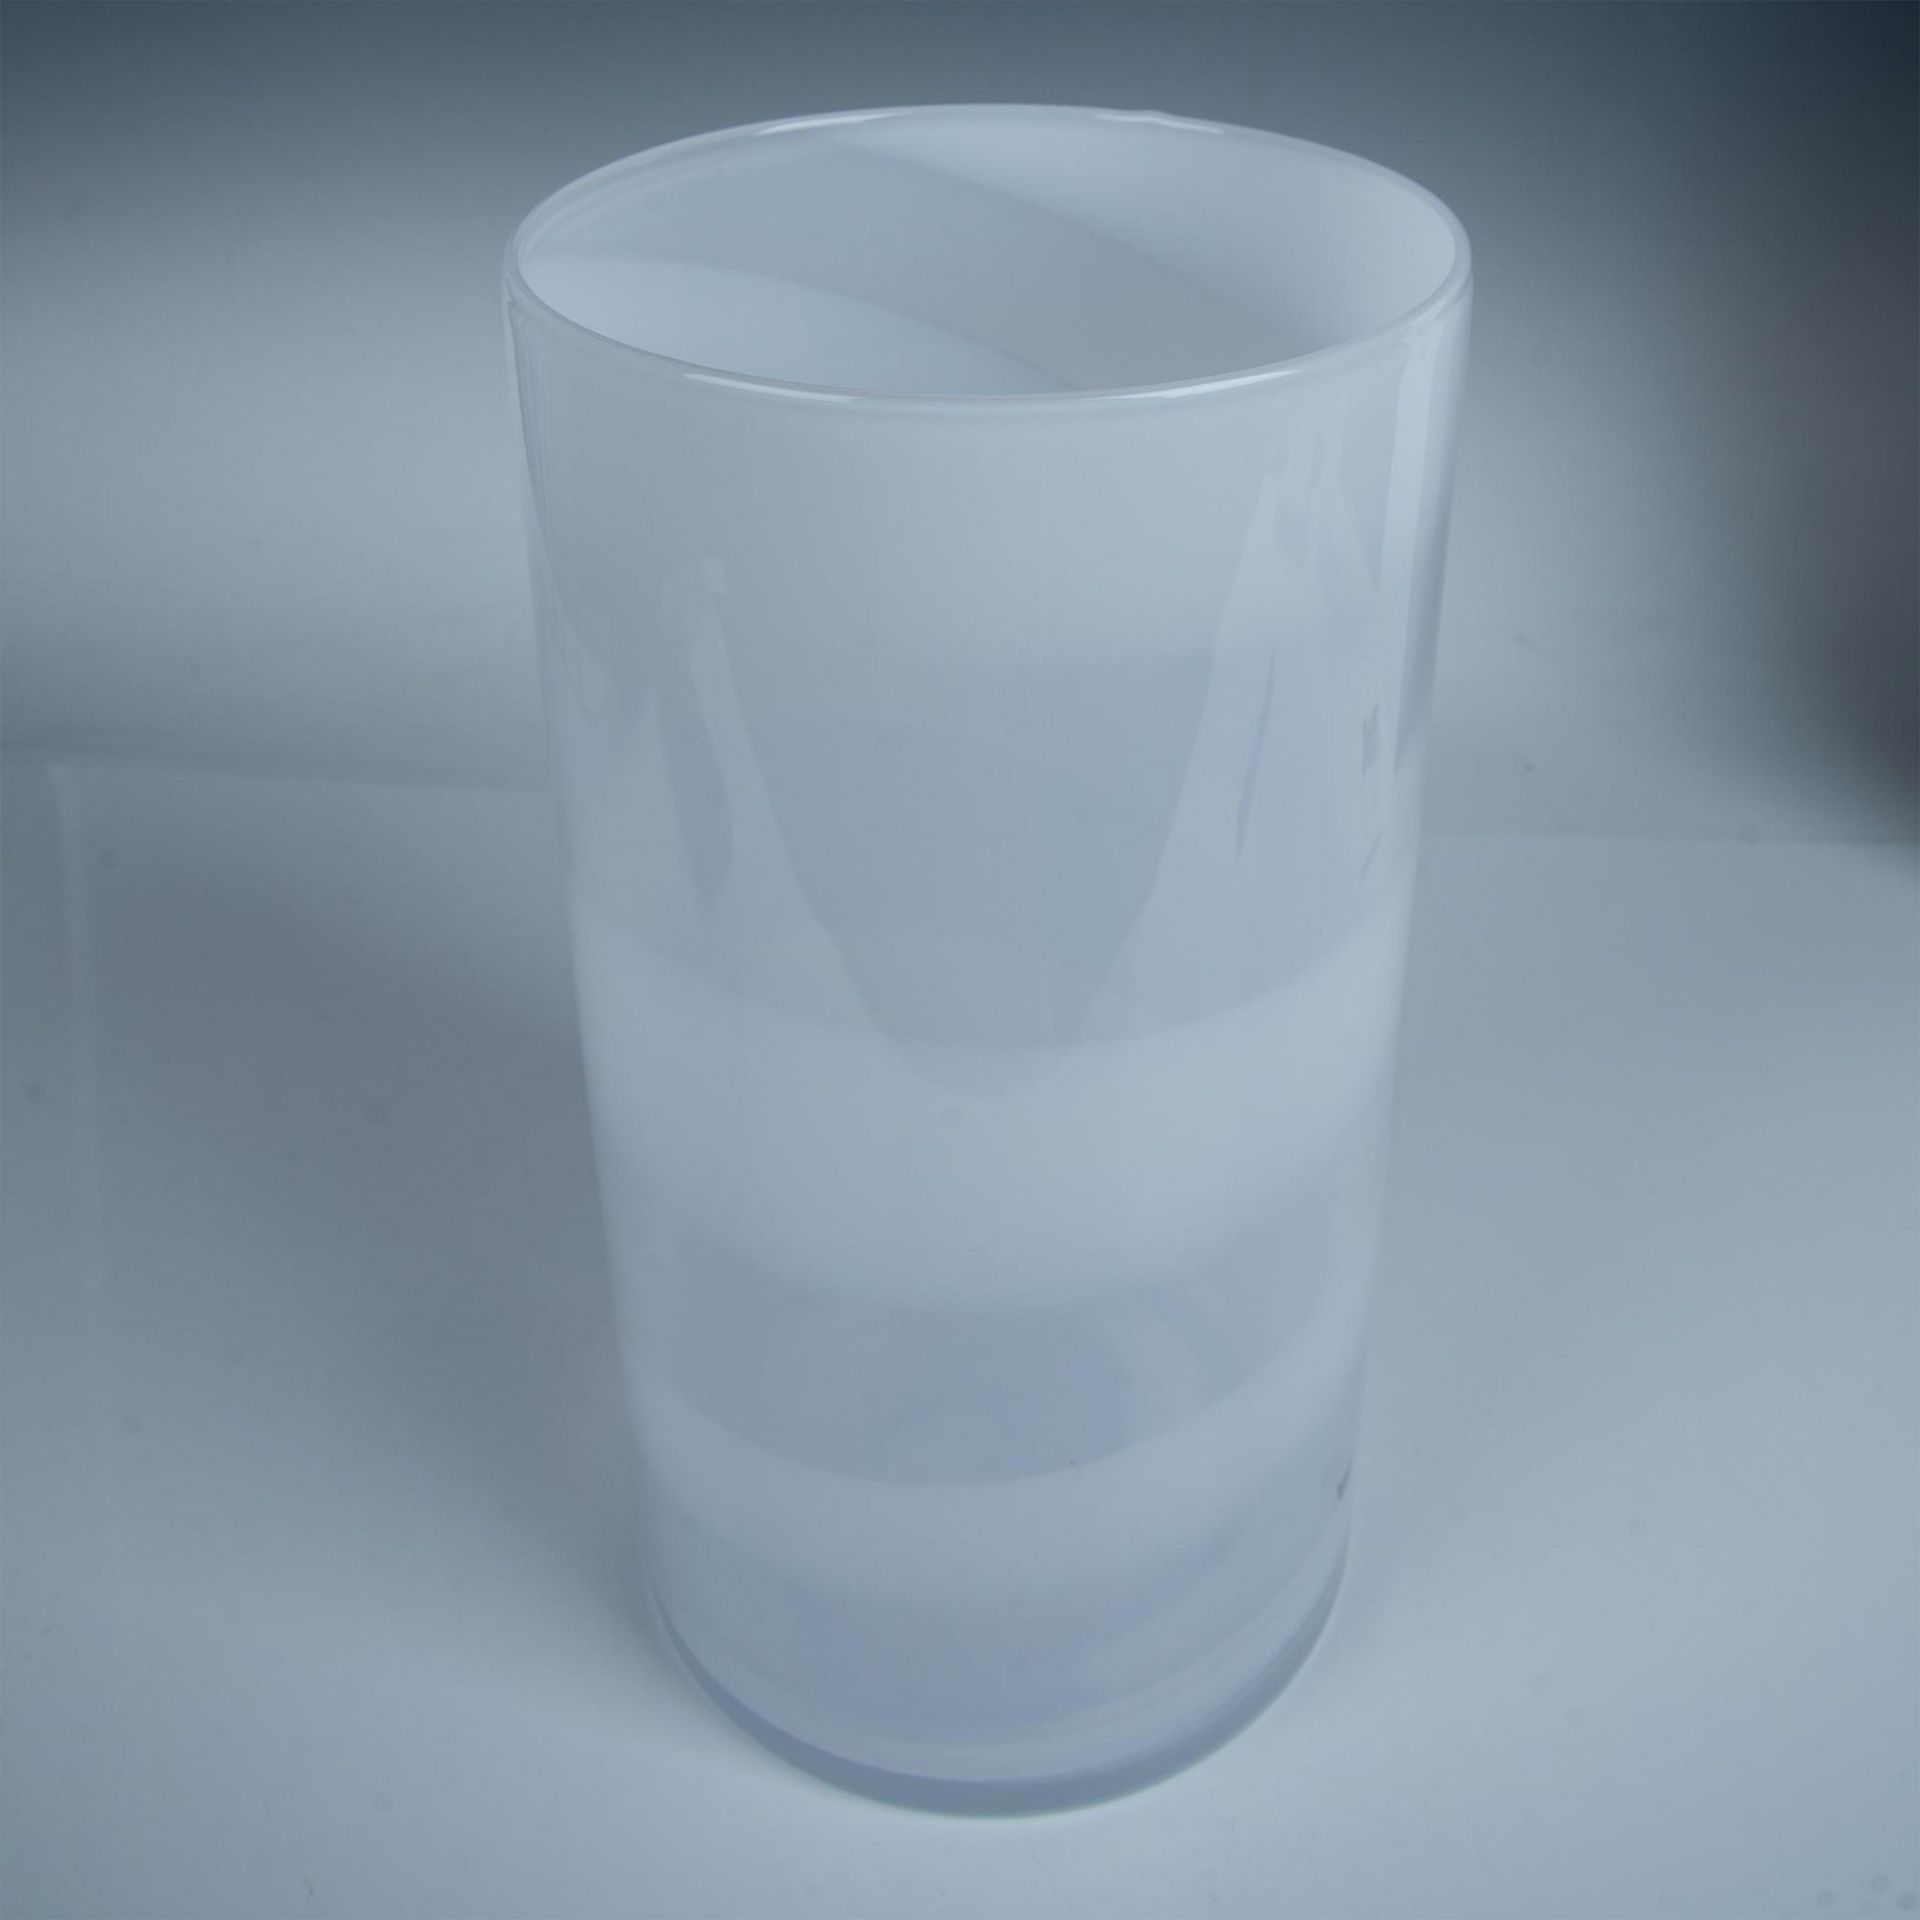 Kosta Boda Art Glass Twist White Vase, Signed - Image 6 of 7